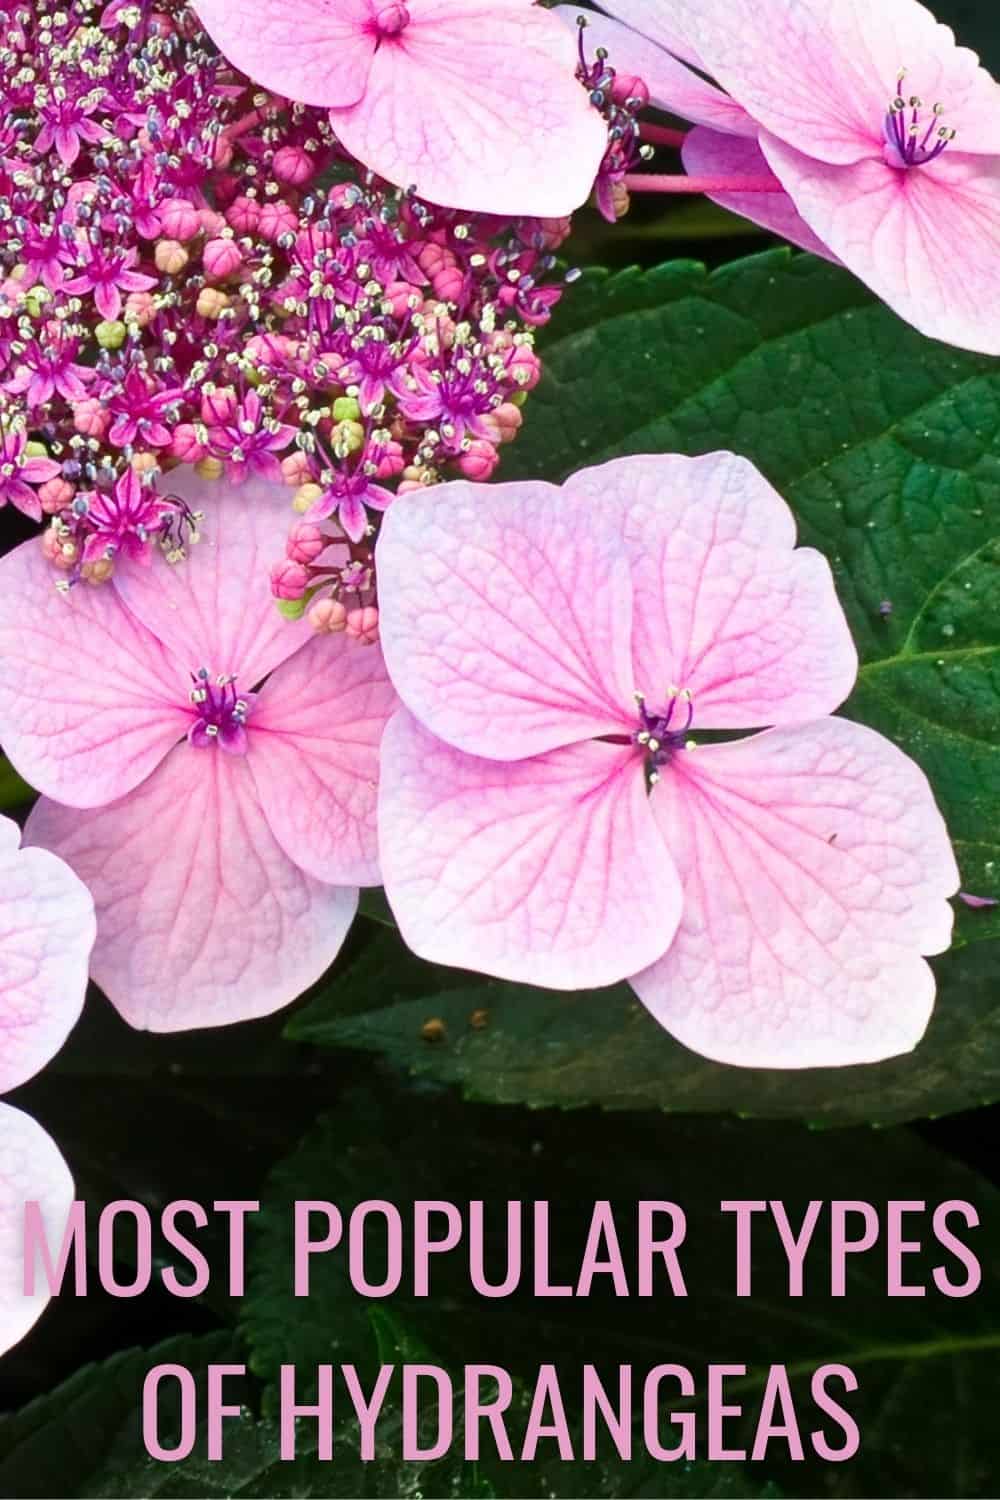 Most popular types of hydrangeas